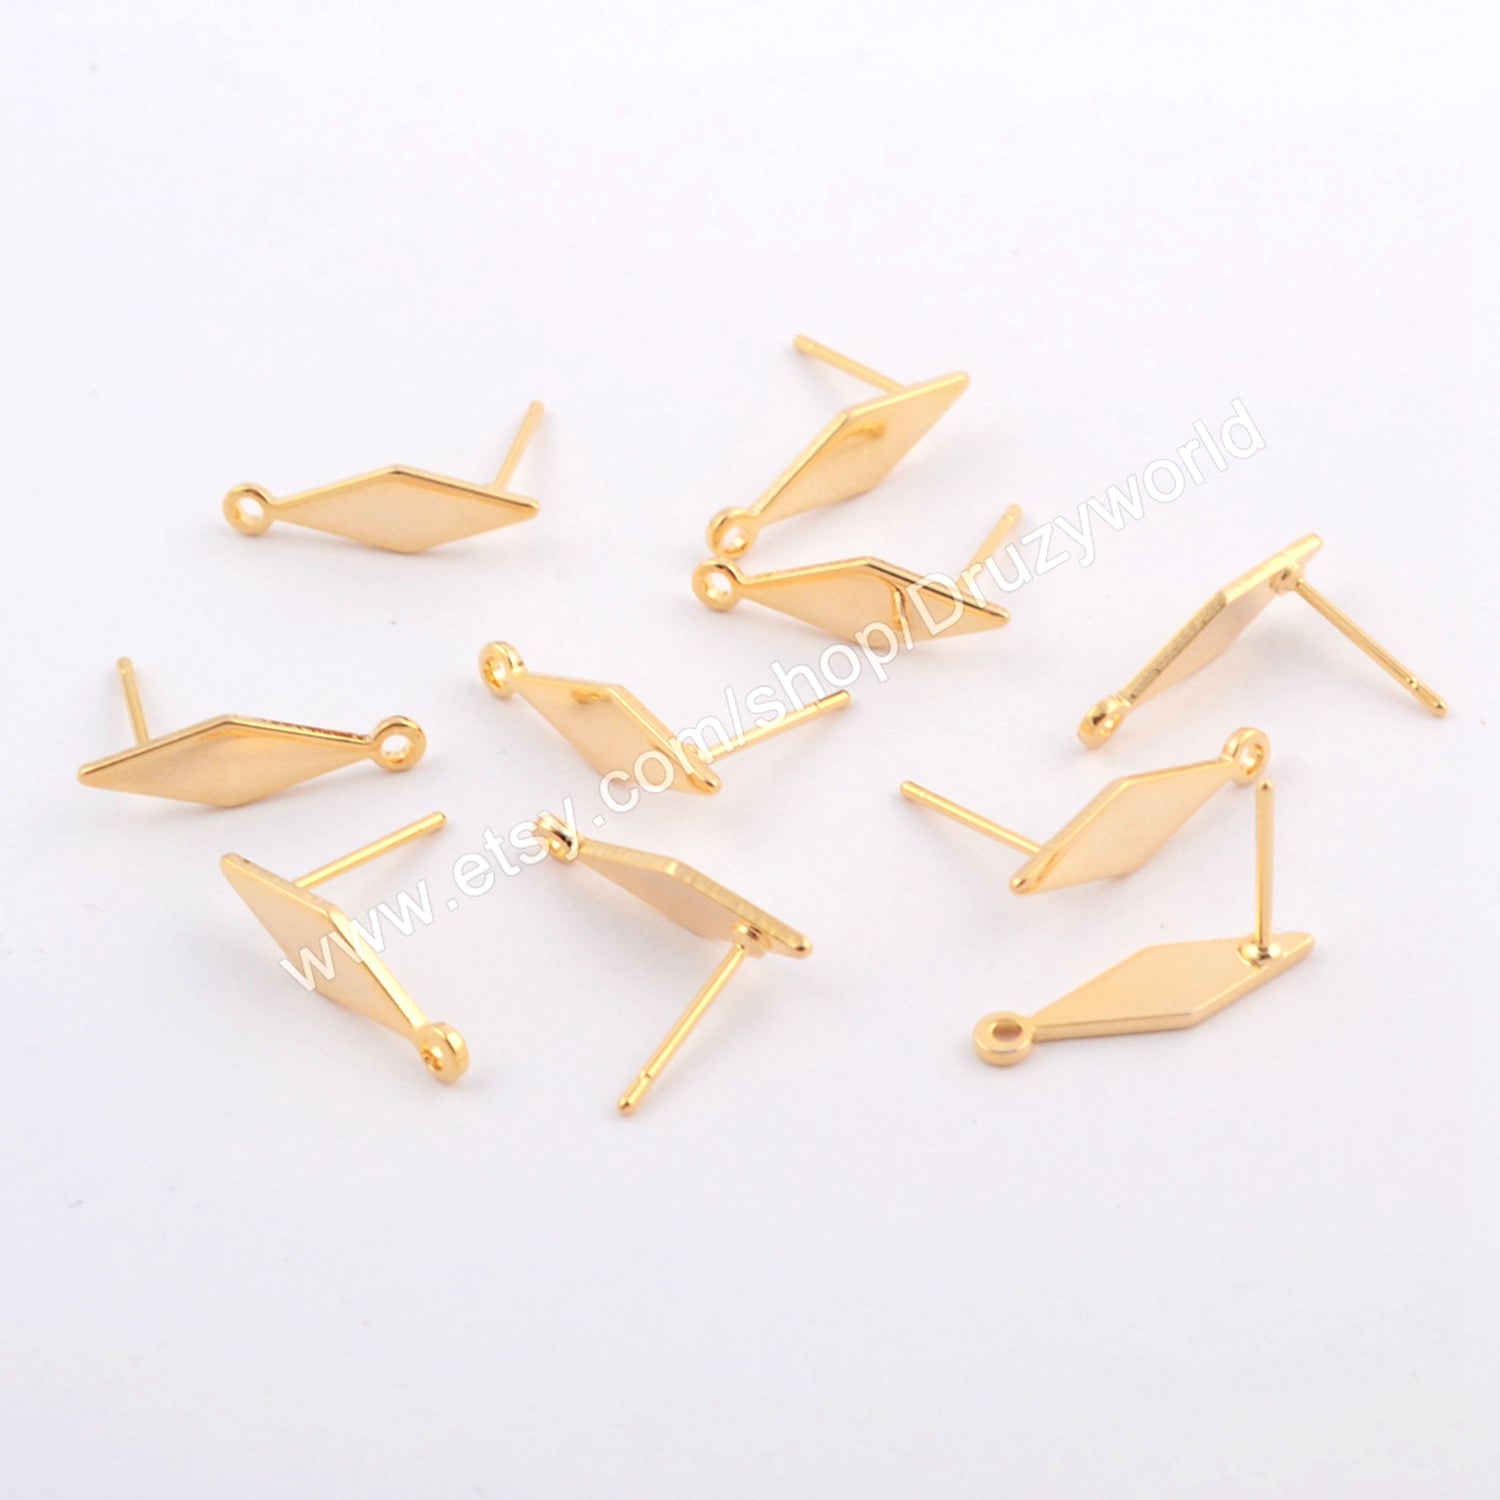 40 Pcs Fashion Gold Plated Brass Diamond Shape Slice DIY Stud Earrings Findings With Loop Dangle Earring Charm Making Jewelry PJ387